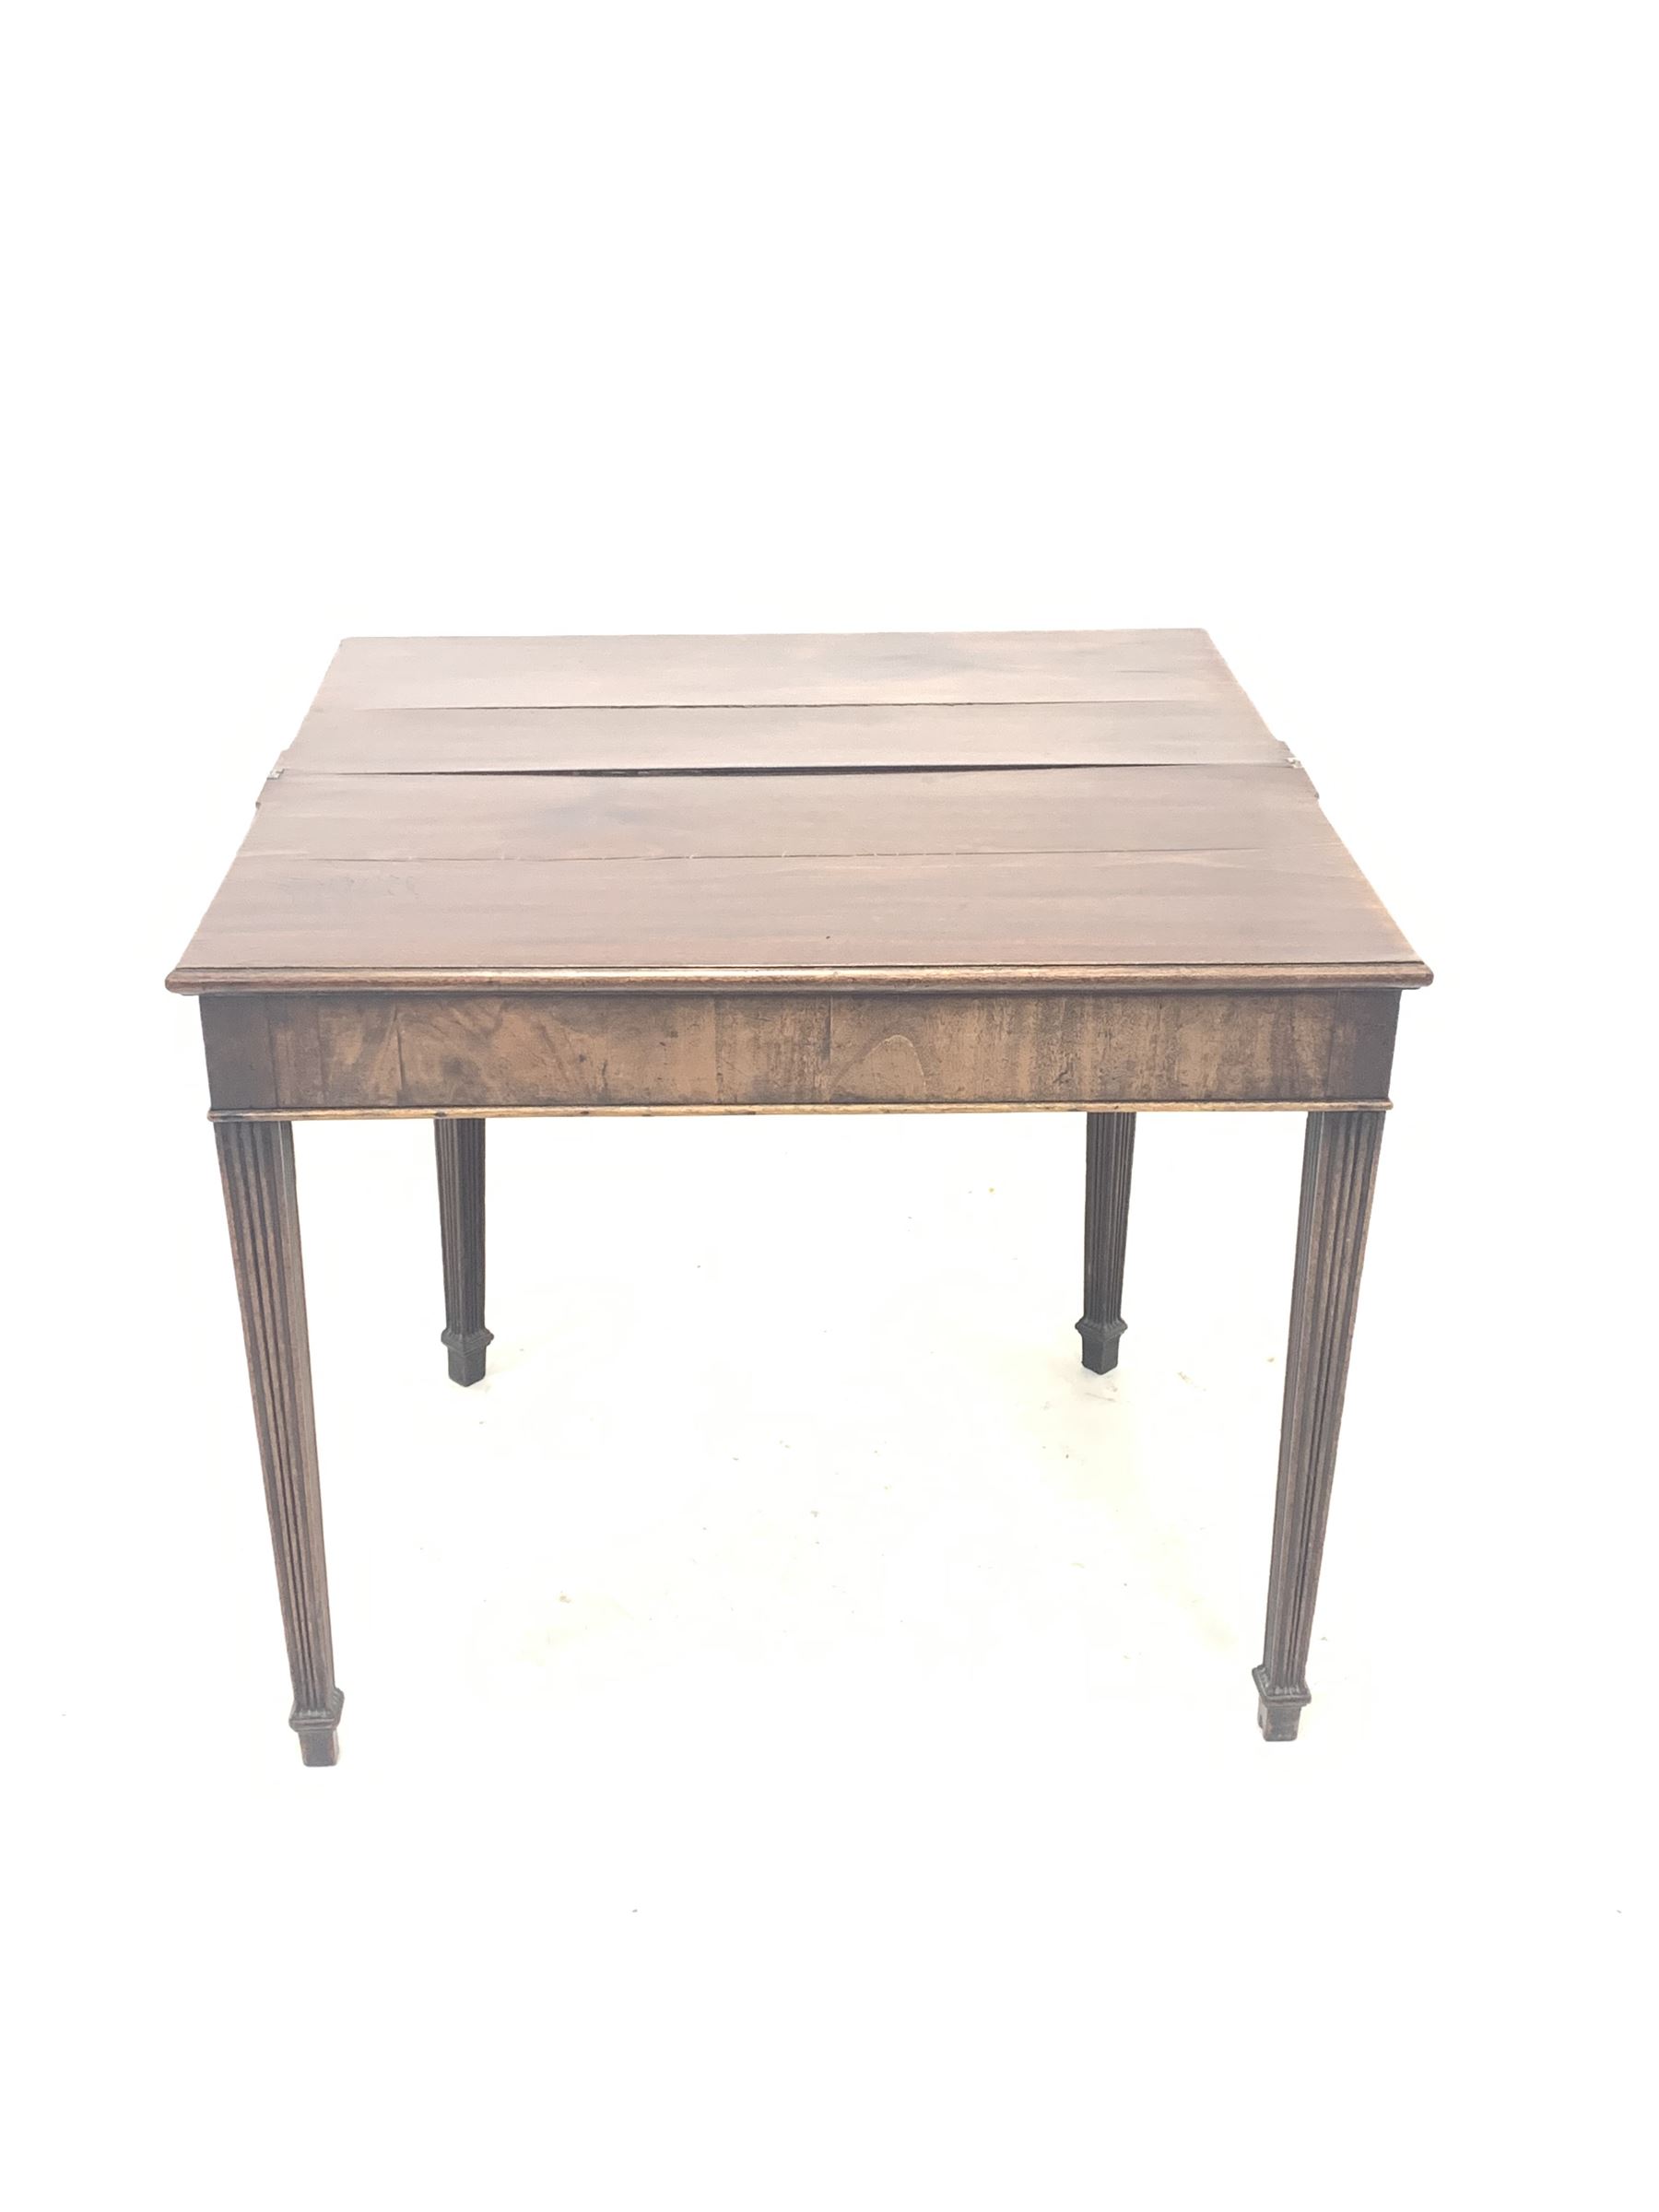 Mid 19th century Gillows design figured mahogany fold over tea table - Image 3 of 6